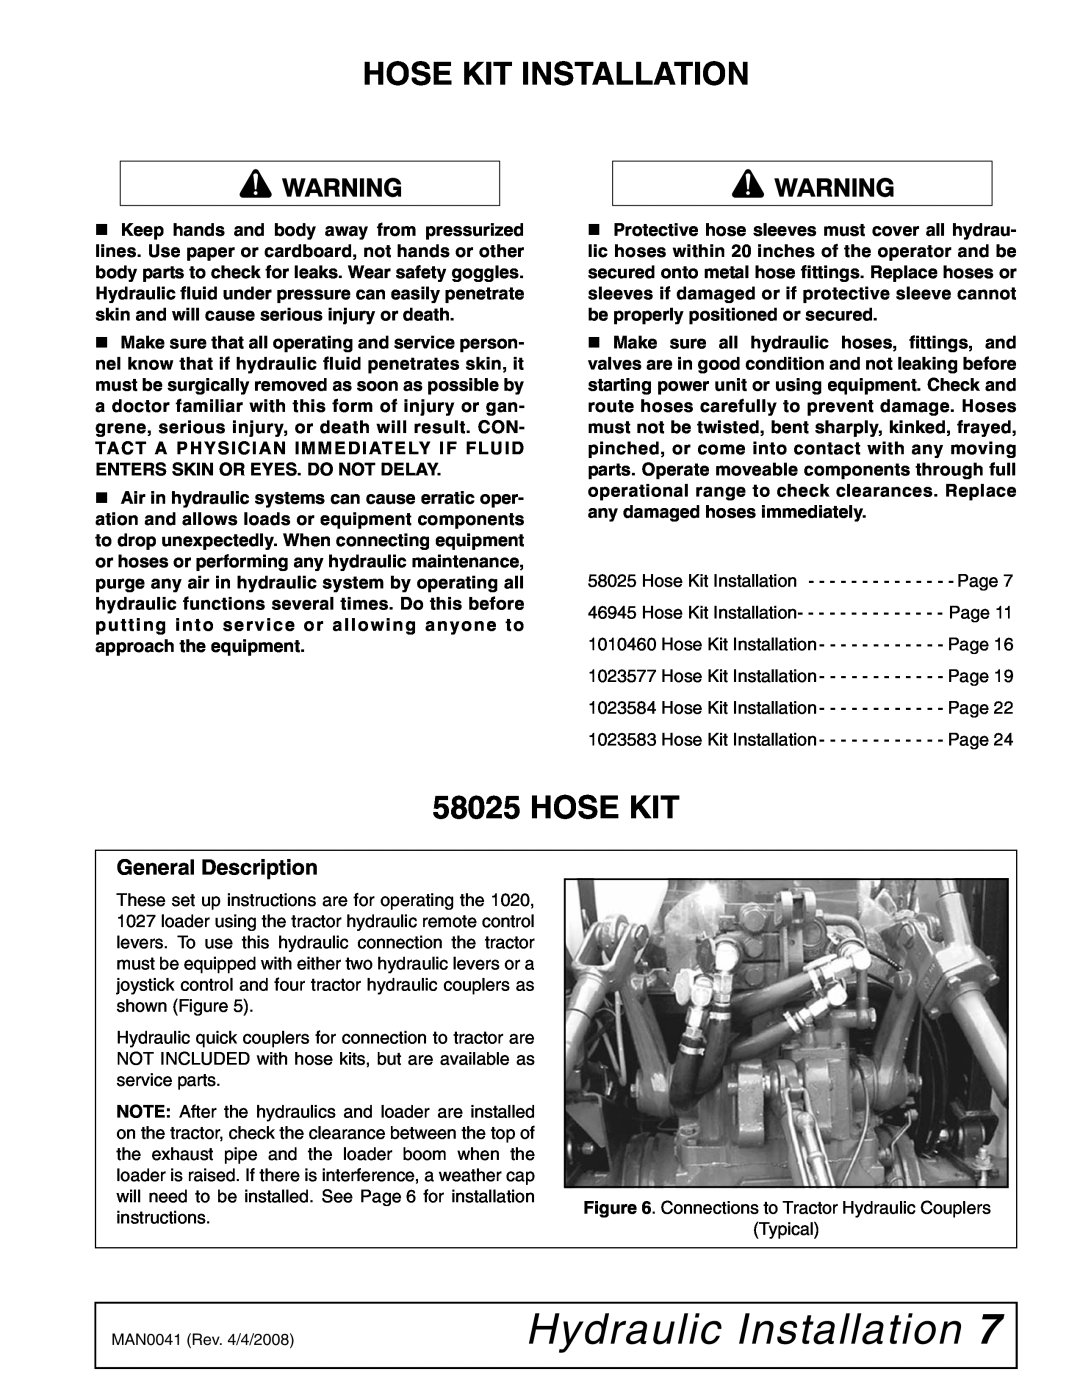 Woods Equipment LU126 installation manual Hydraulic Installation, Hose Kit Installation, General Description 